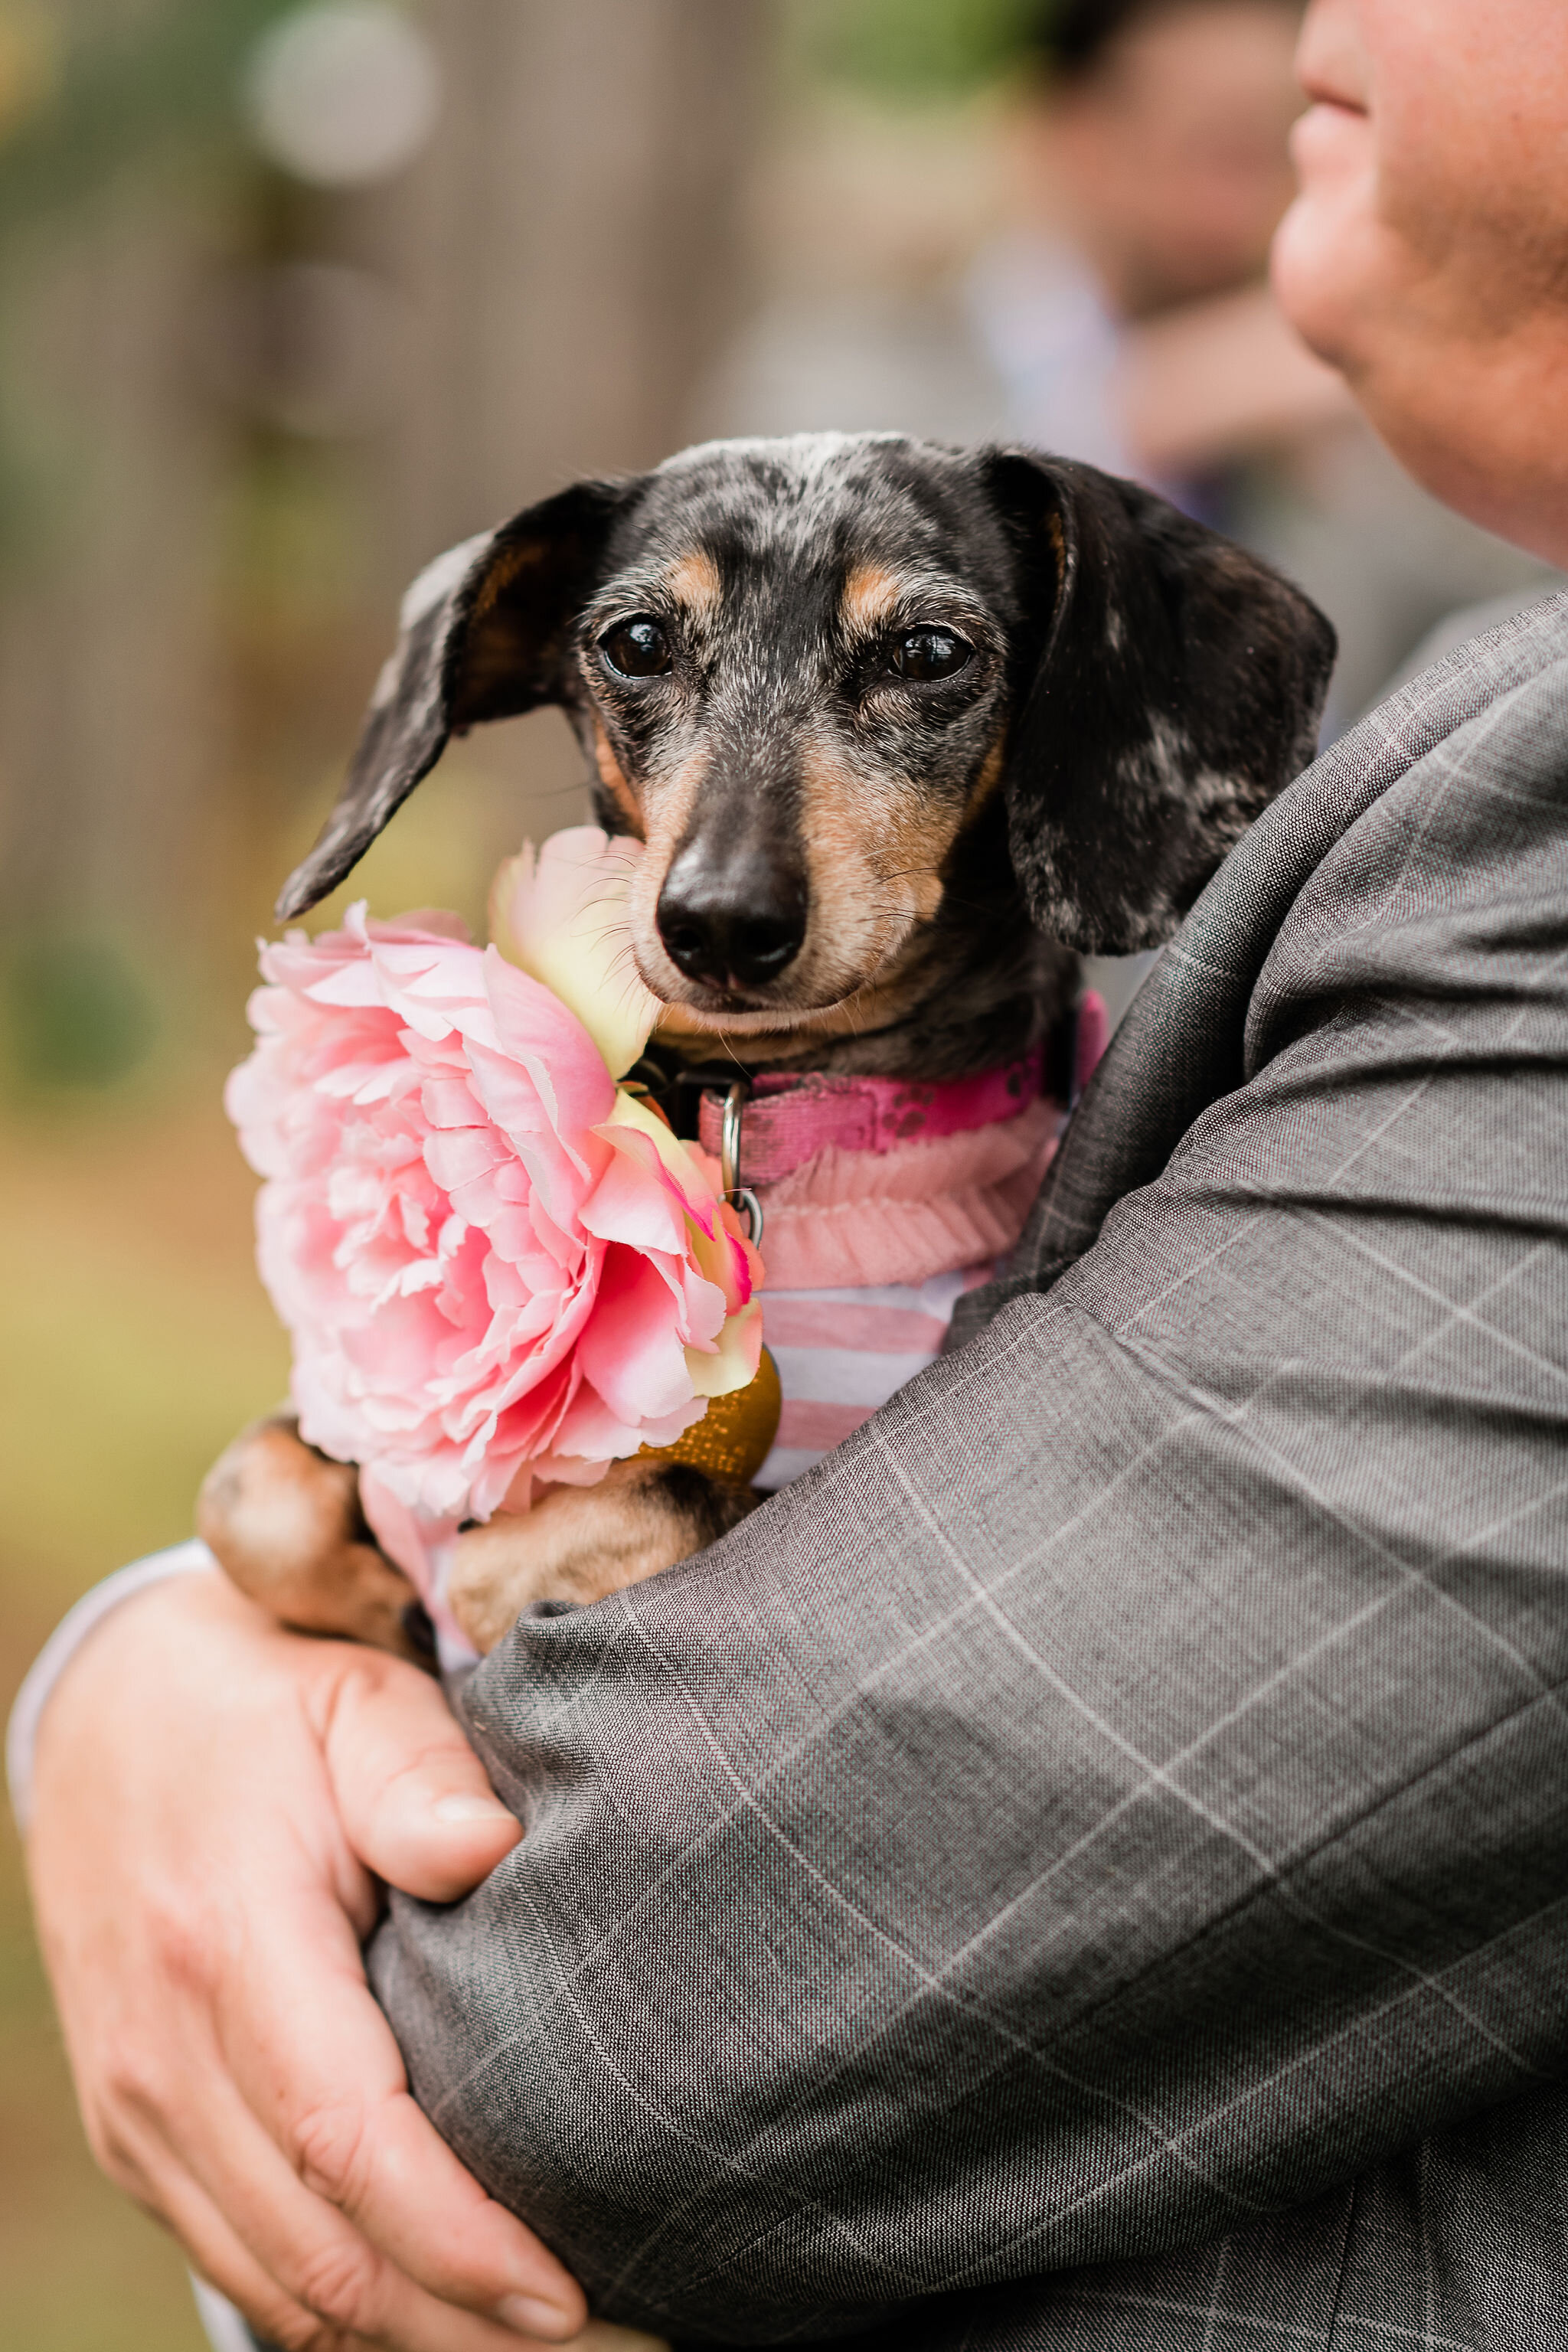 Wedding guest holding dog